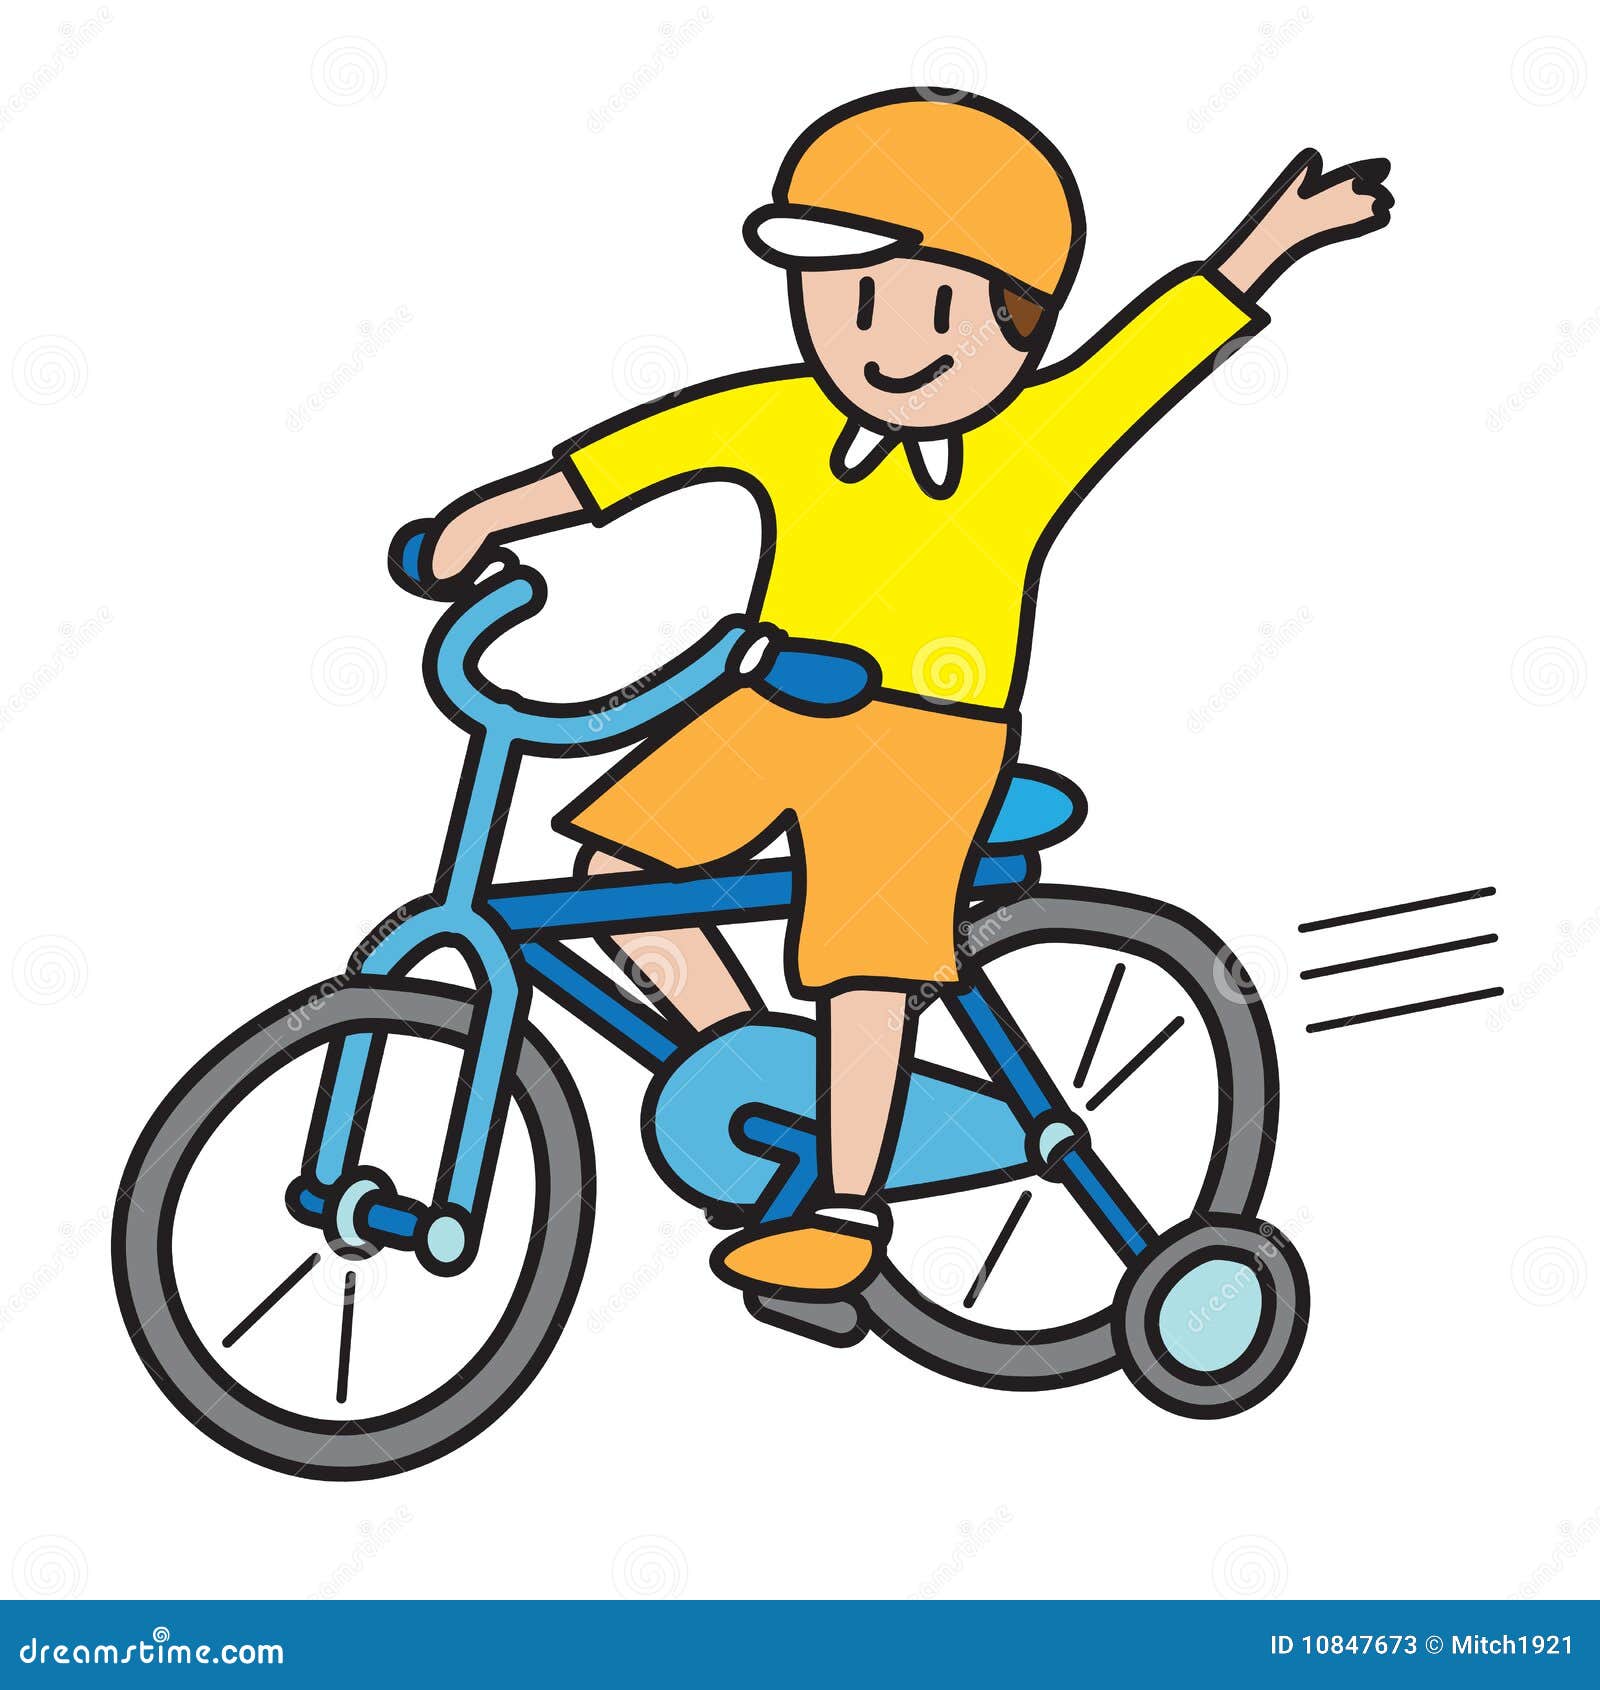 clipart bike safety - photo #14